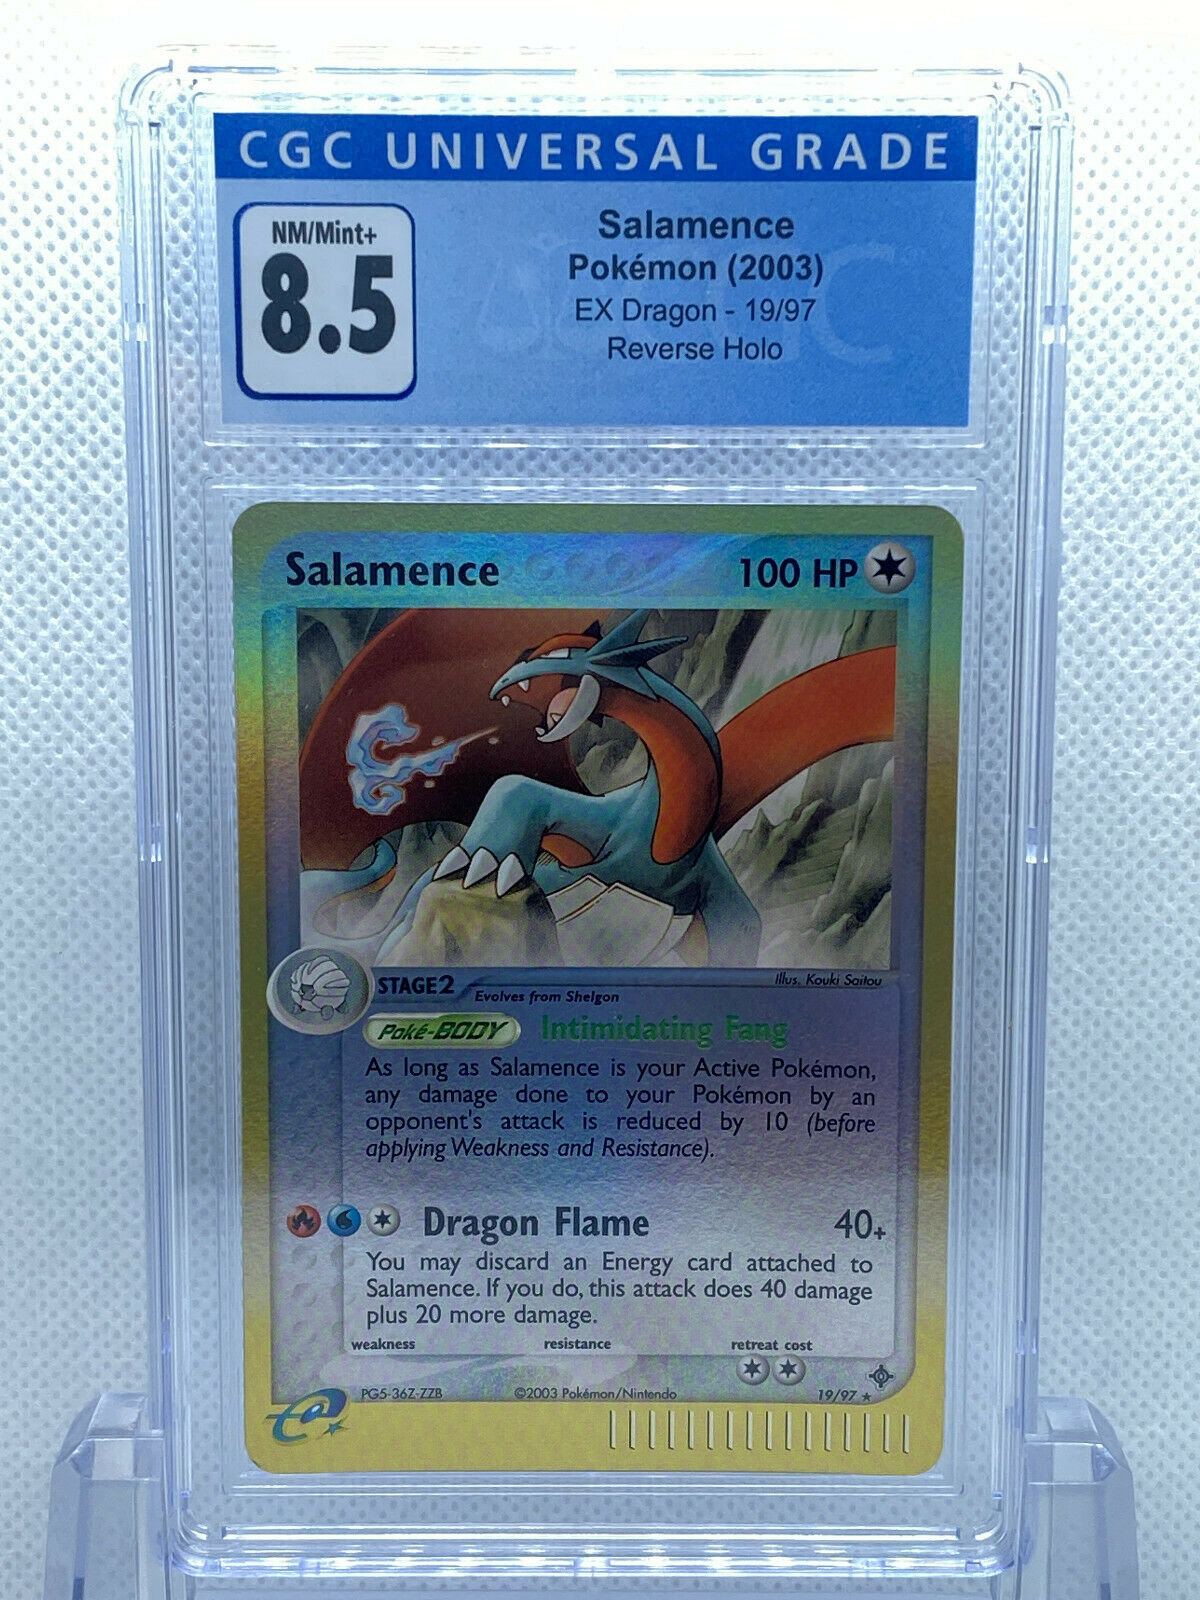 Pokémon (2003) Salamence Reverse Holo EX Dragon #19/97 CGC 8.5 NM+